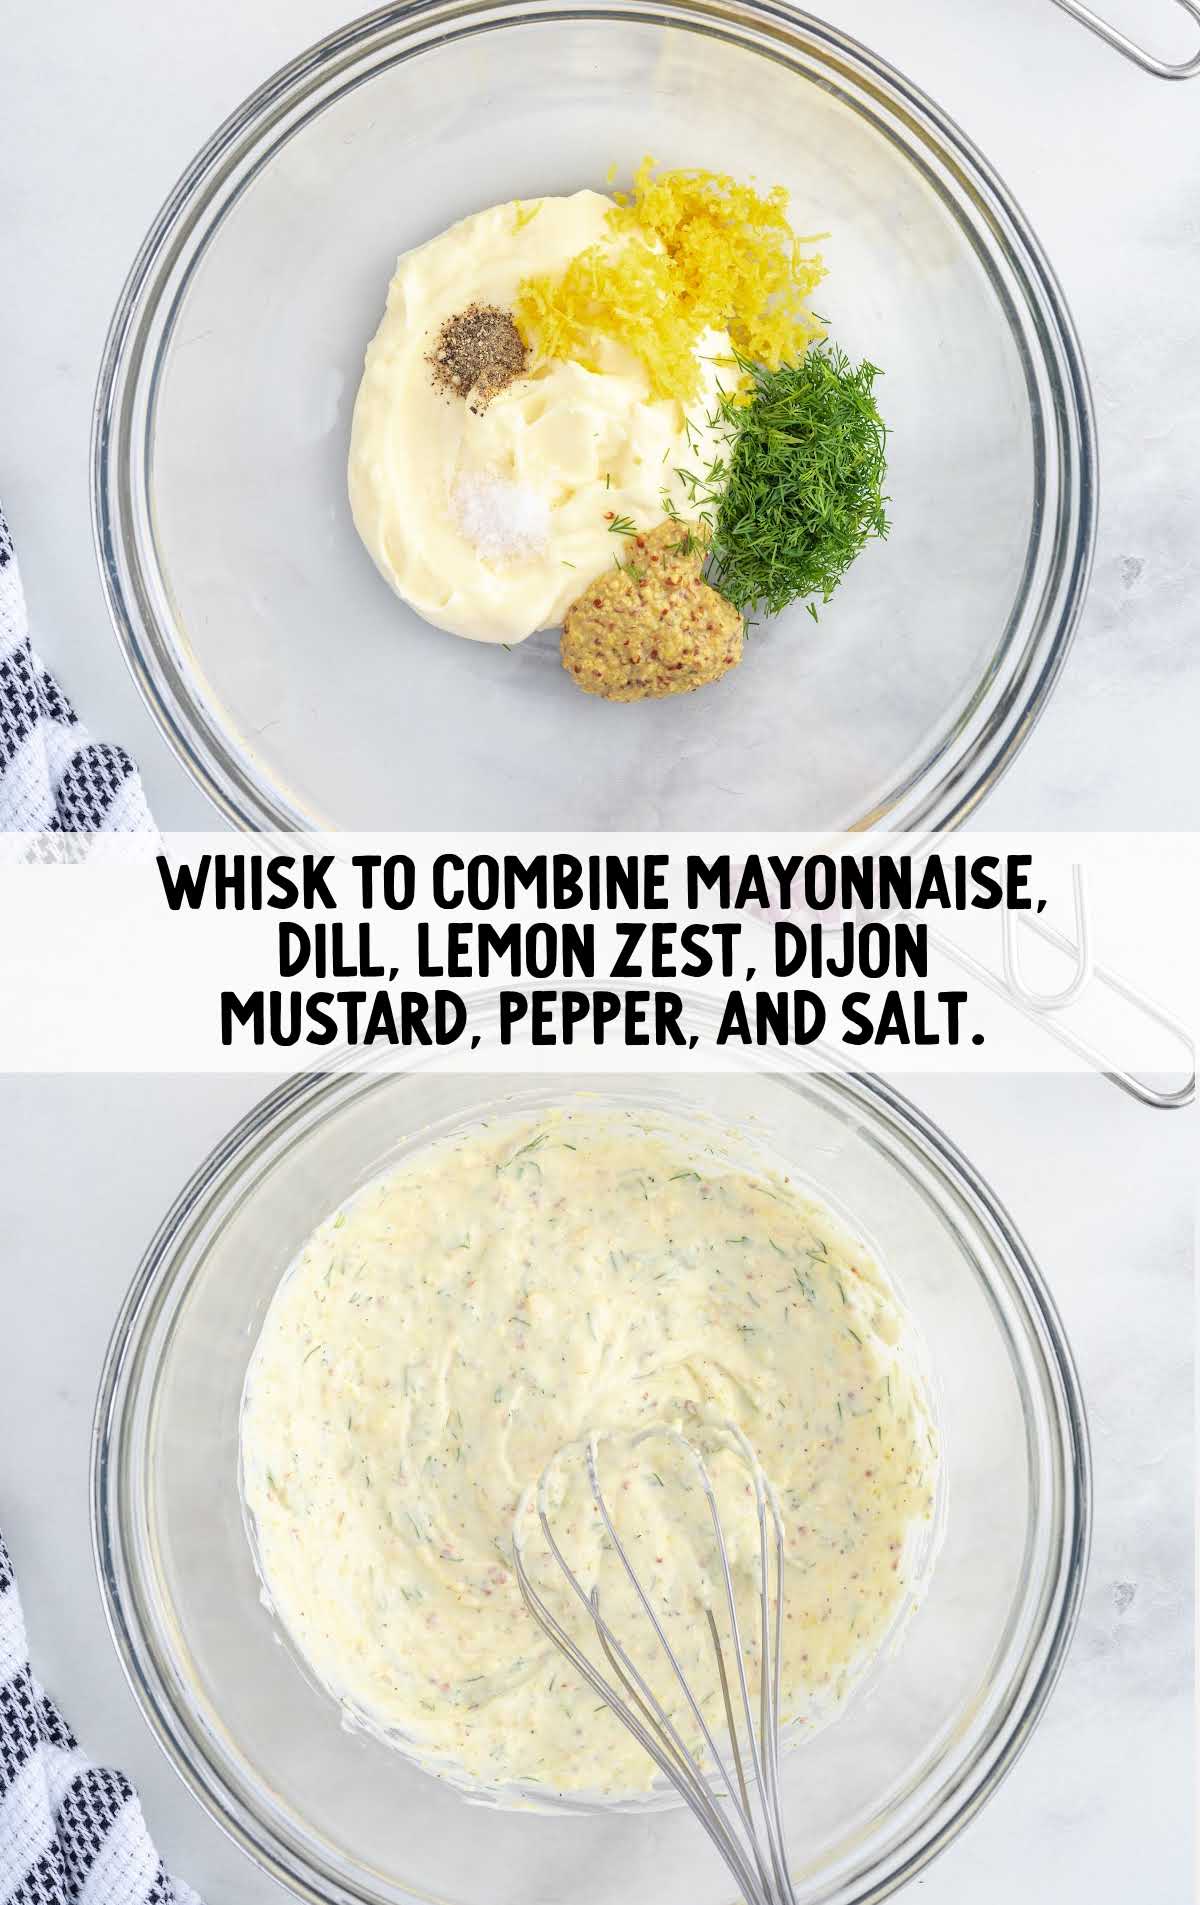 mayonnaise, dill, lemon zest, dijon mustard, pepper, and salt whisked in a bowl